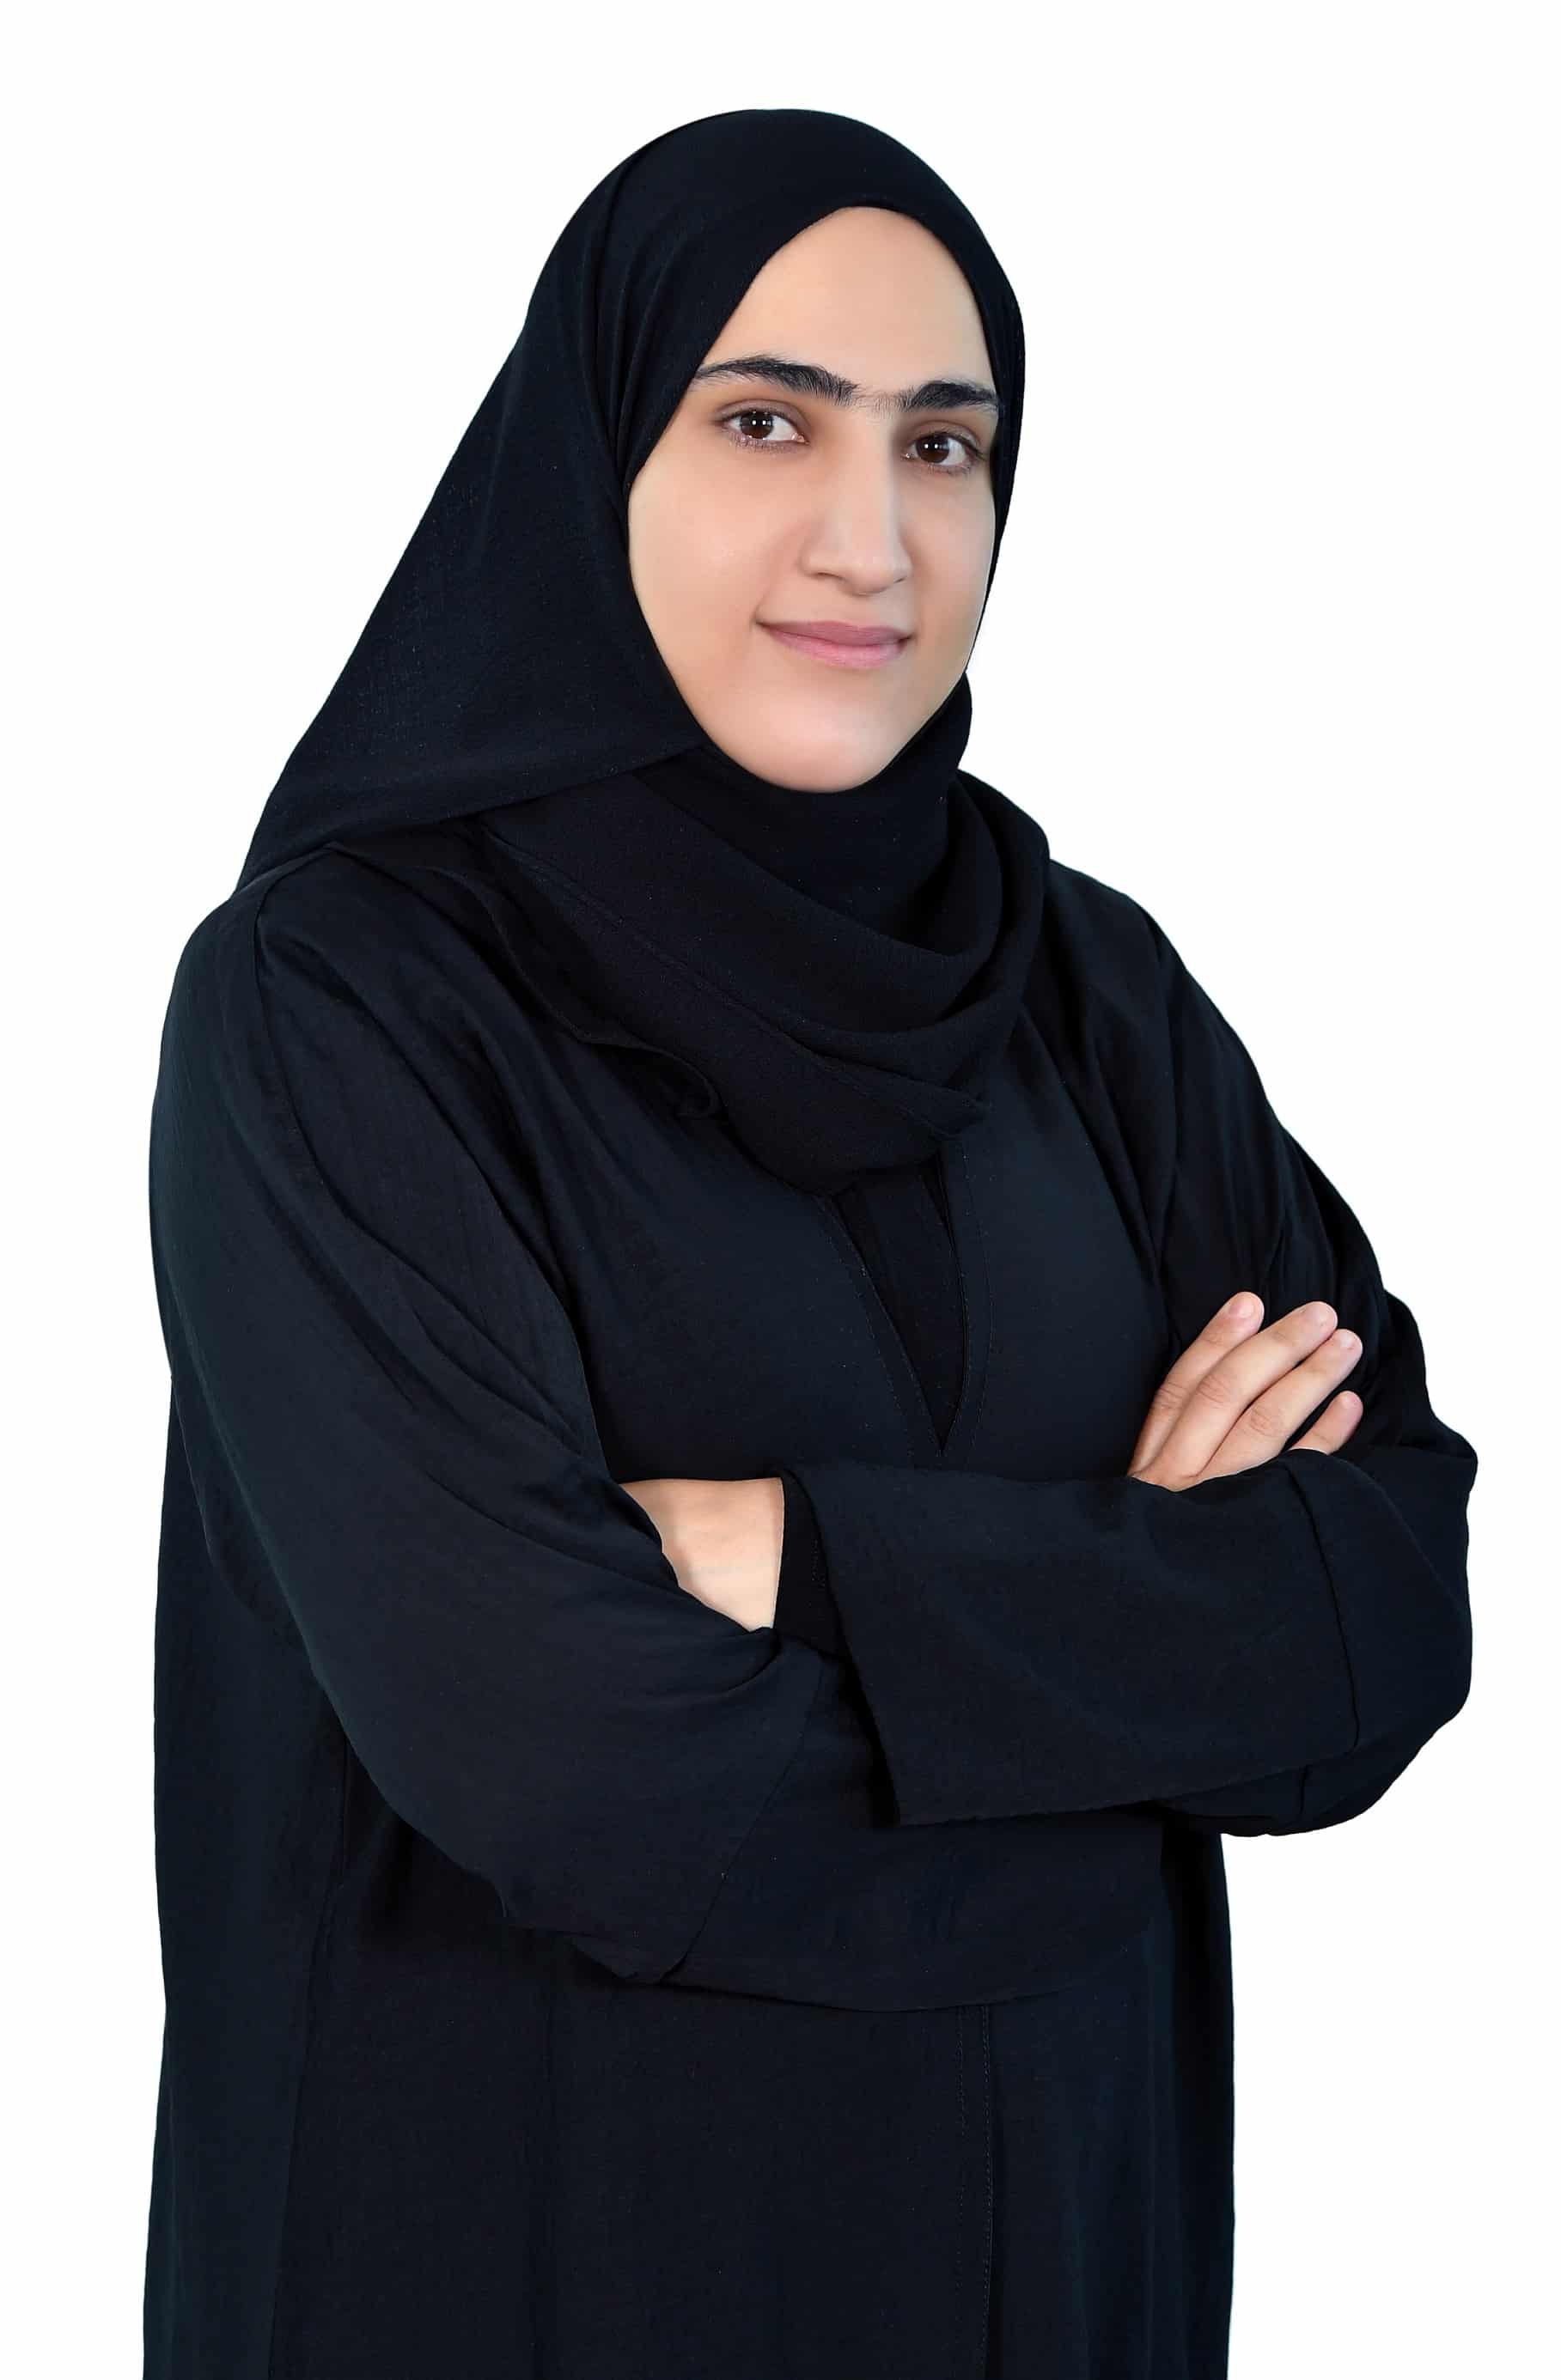 د. نورة عبدالجبار ال علي